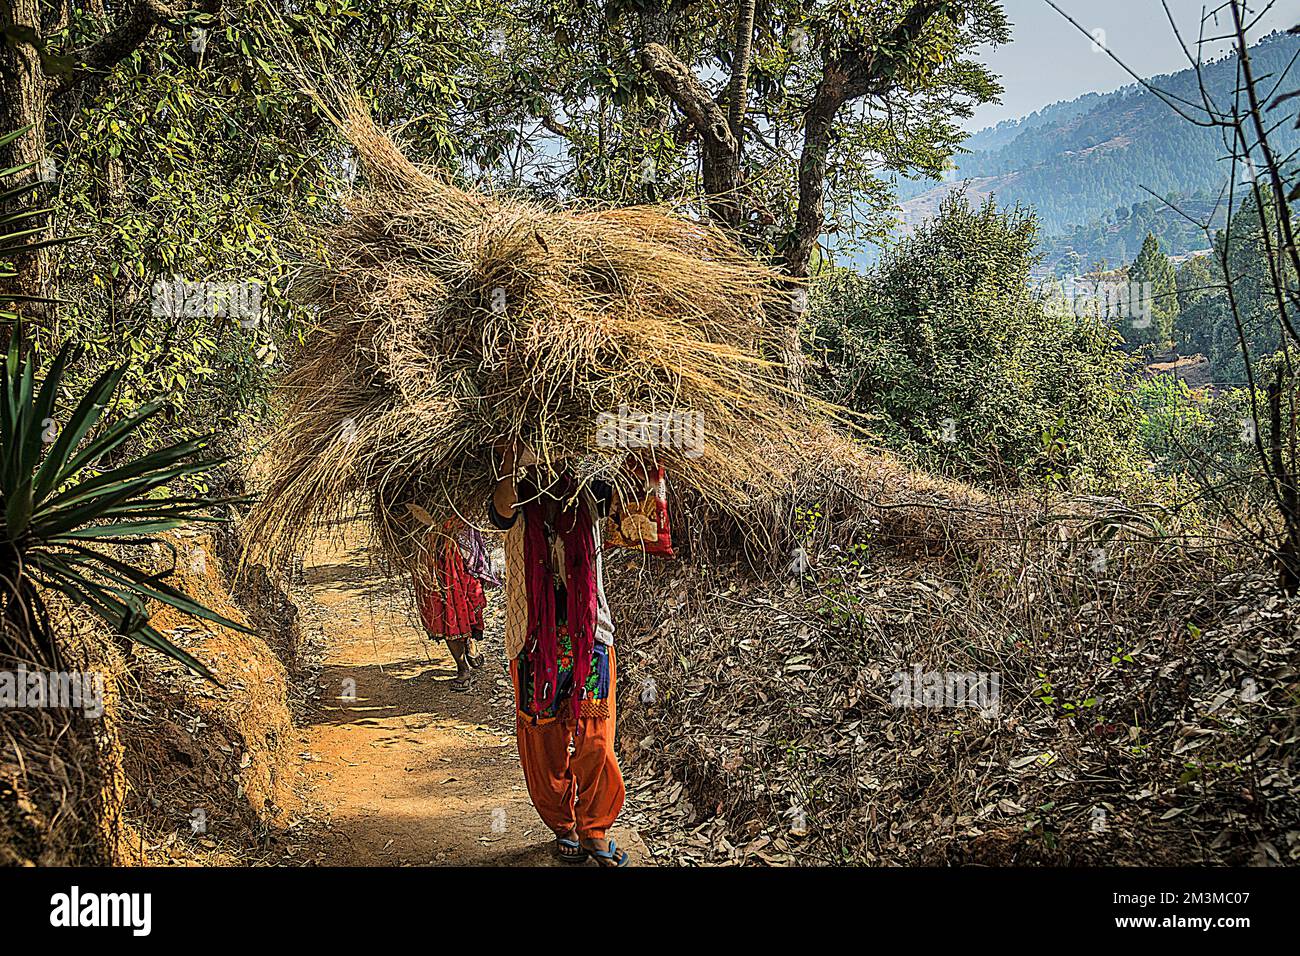 Woman carrying hay on her head, Kausani, Bageshwar, Kumaon, Uttarakhand, India Stock Photo